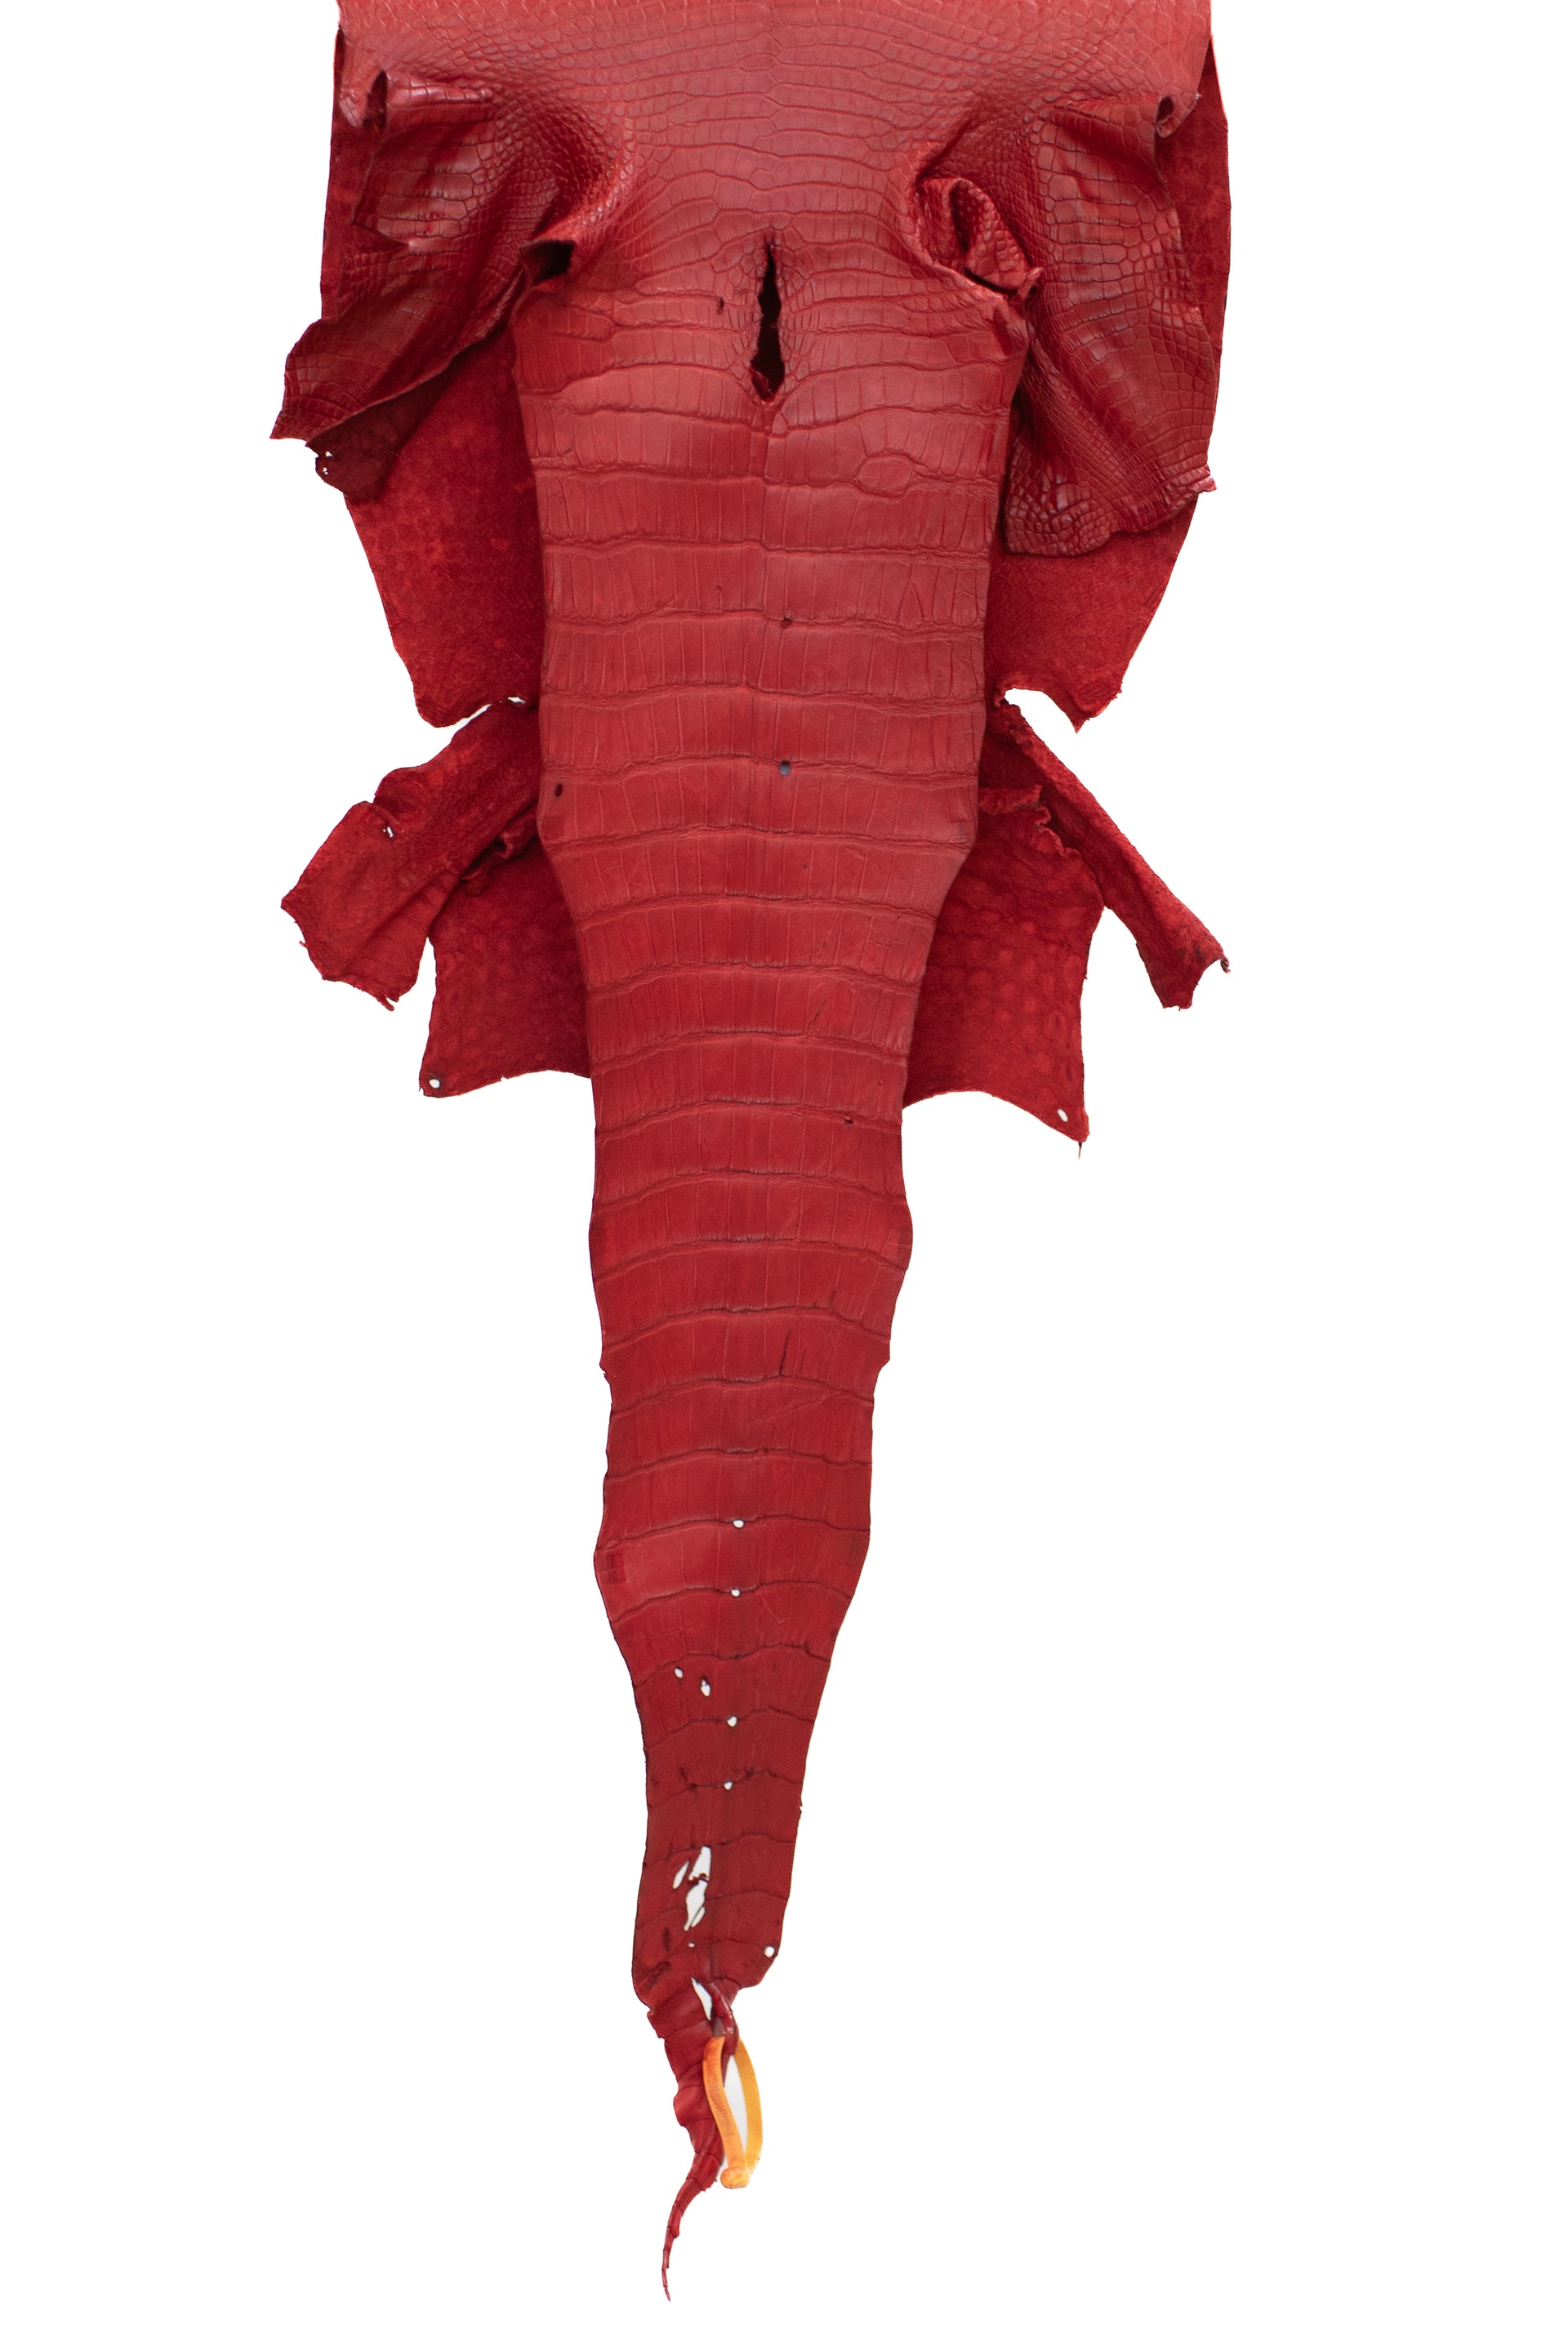 43 cm Grade 4/5 Candy Apple Red Matte Wild American Alligator Leather - Tag: LA22-0036333